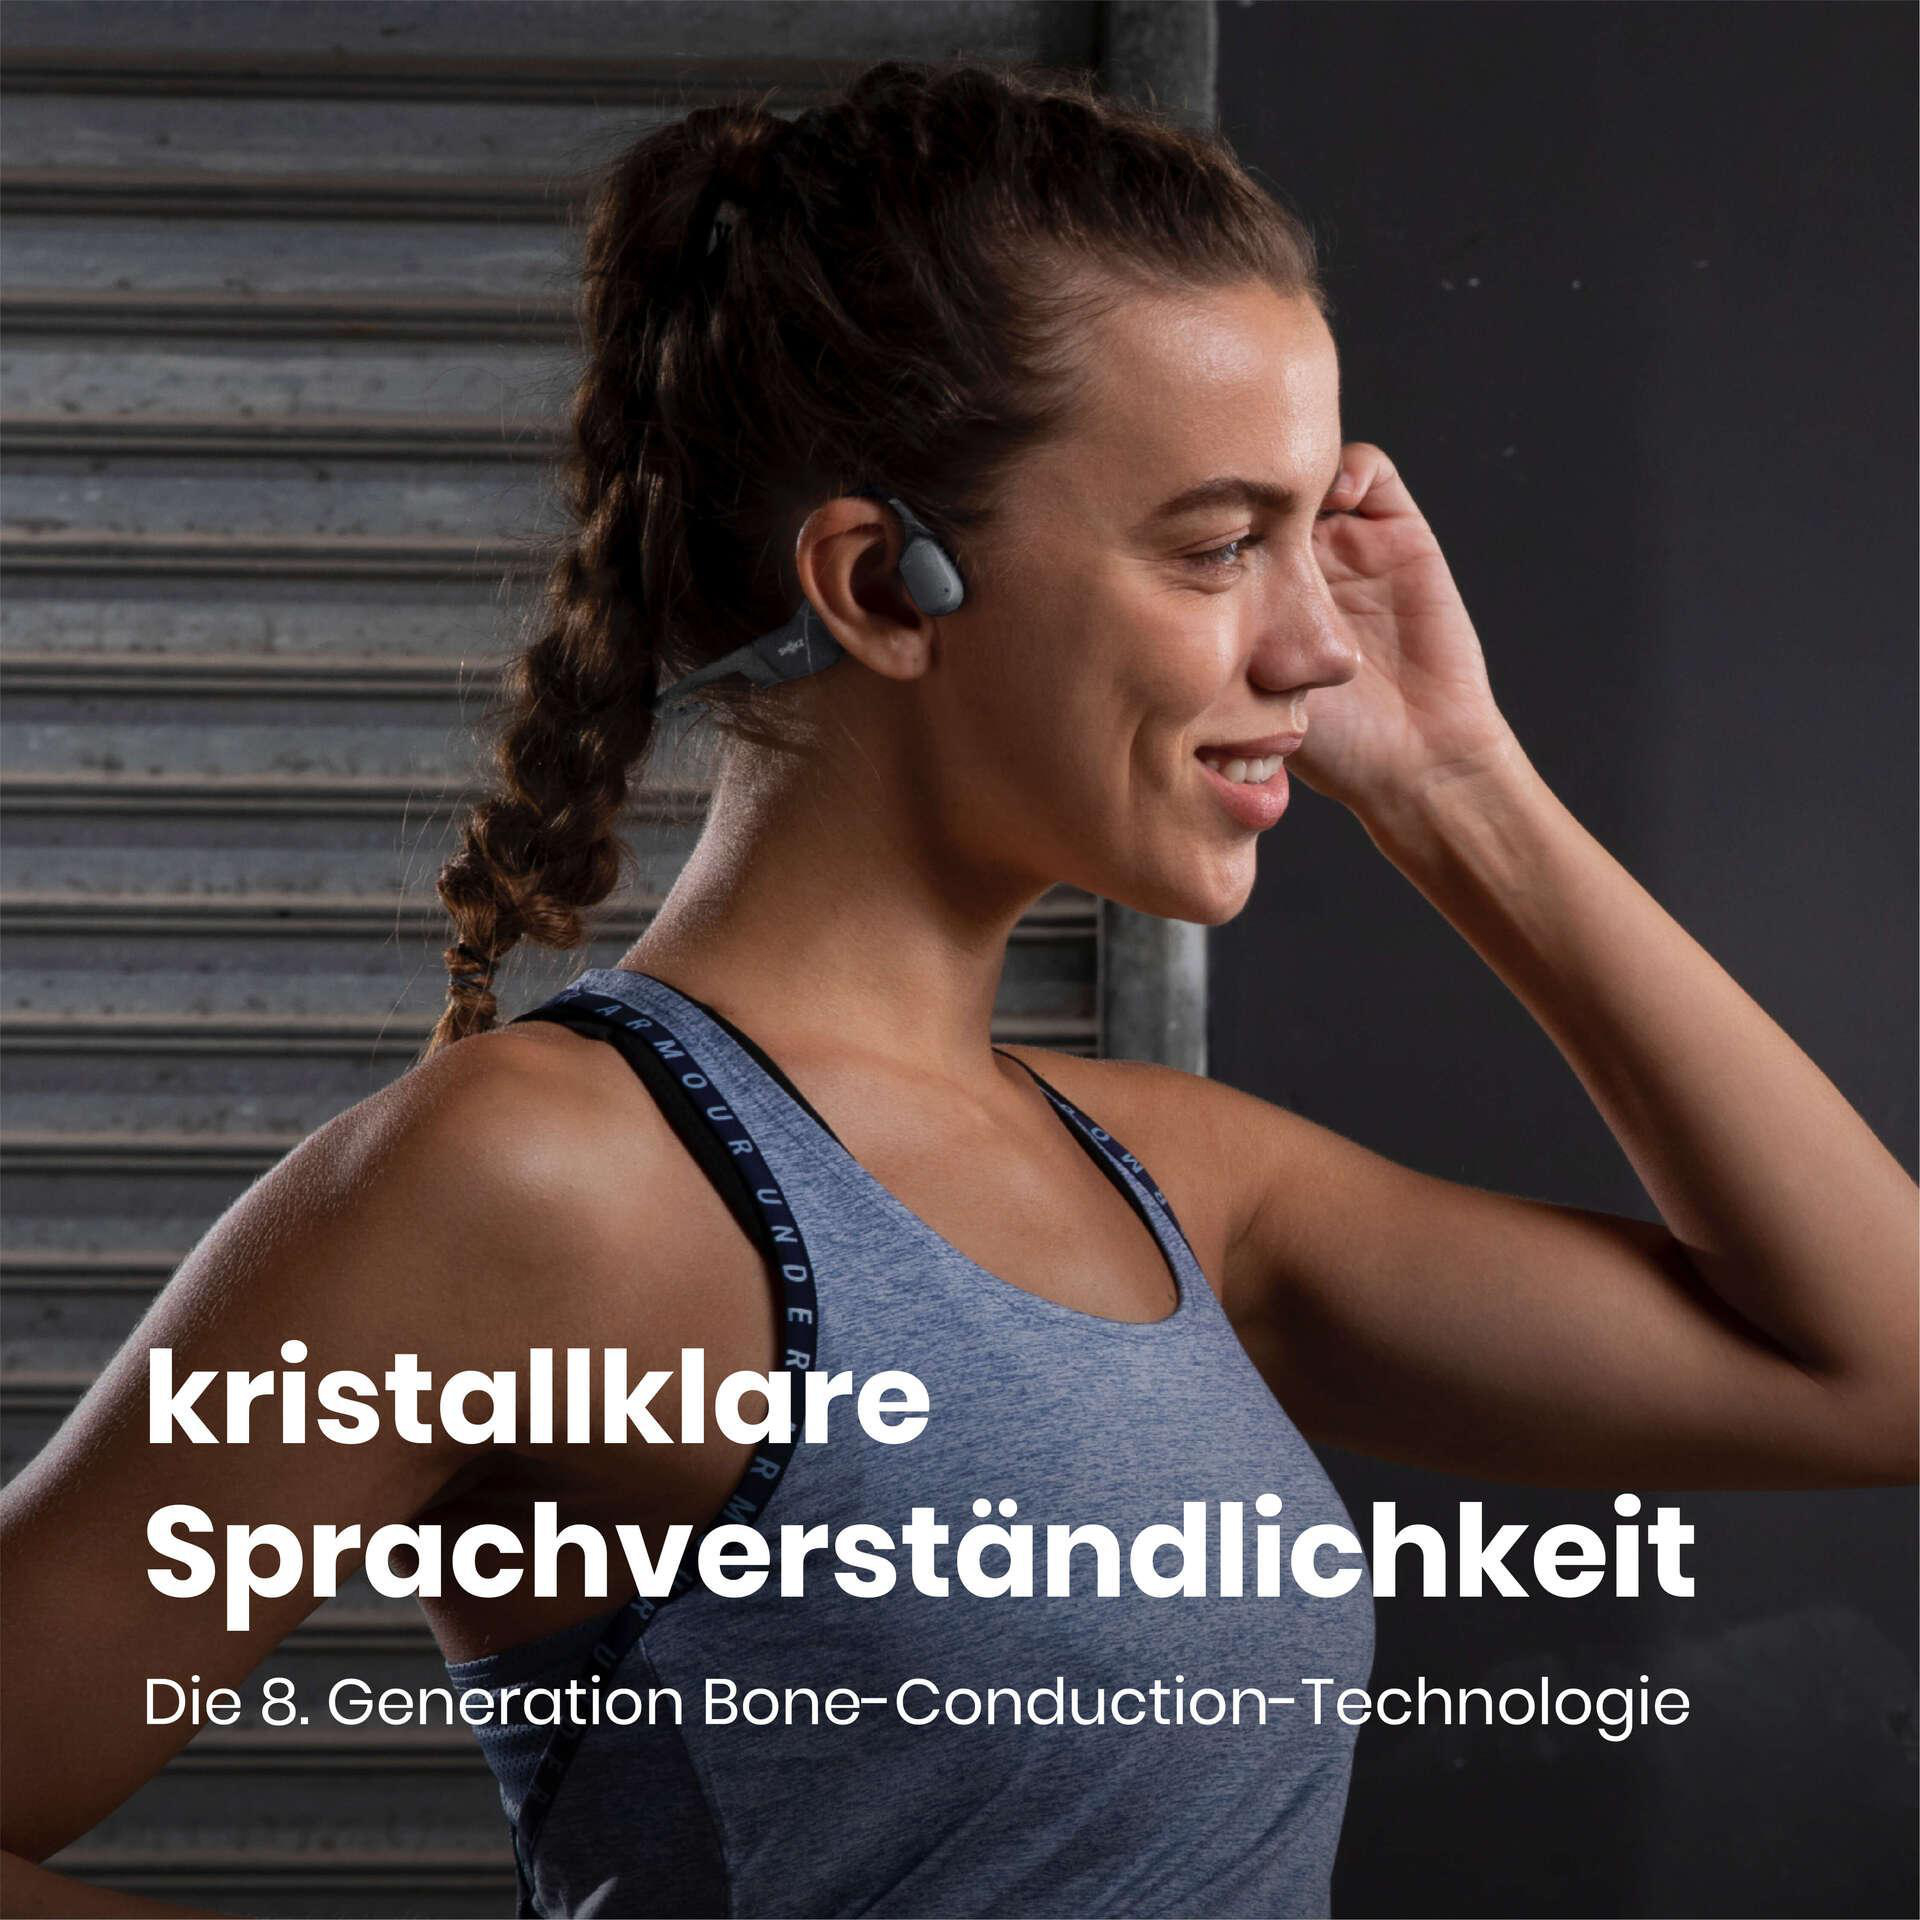 Bluetooth Grau Kopfhörer SHOKZ OpenRun, Open-ear